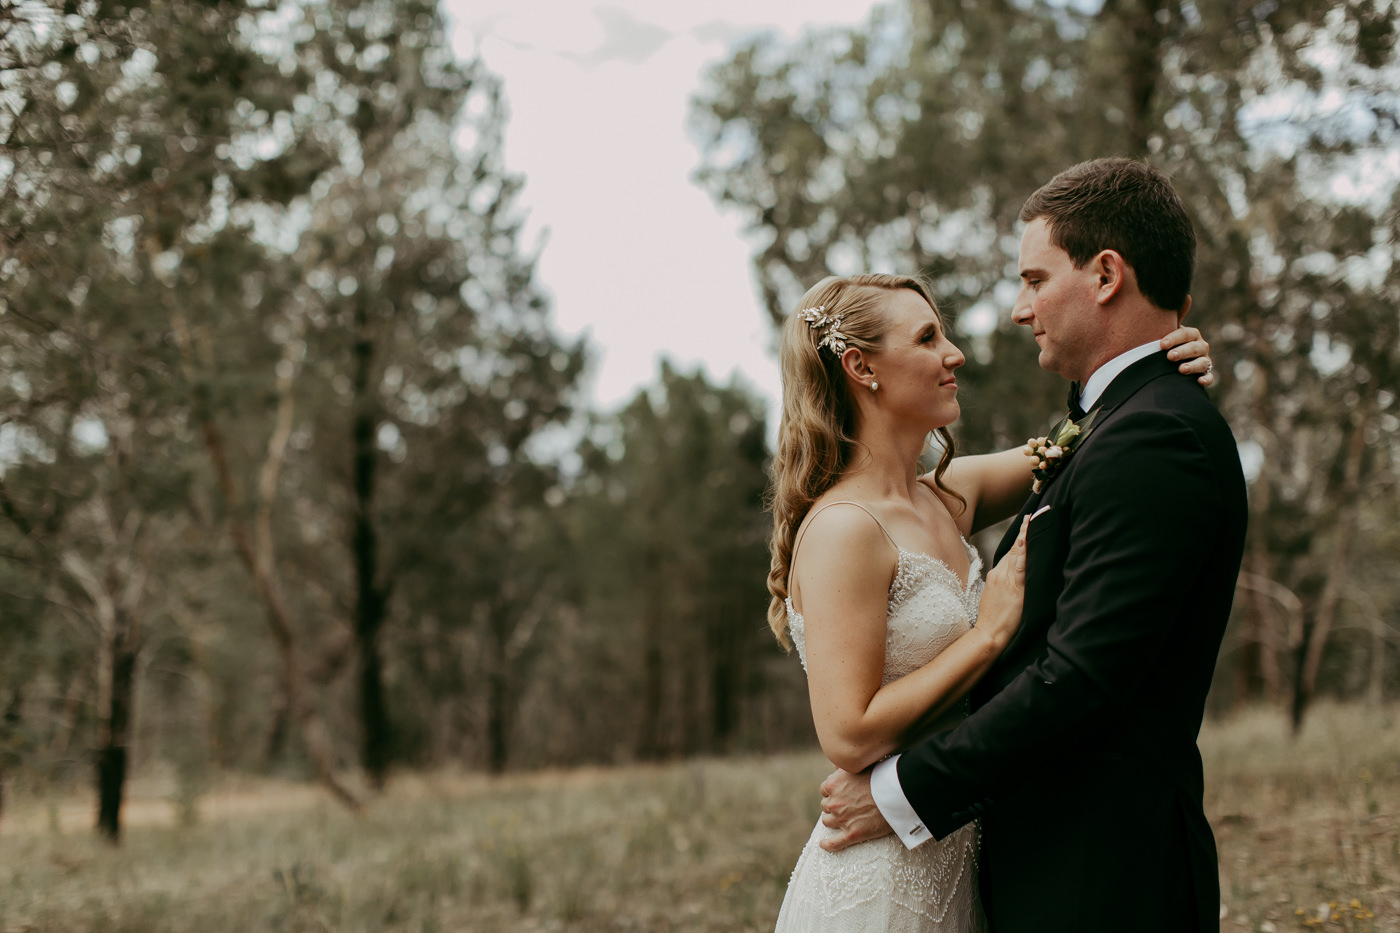 Anthony & Eliet - Wagga Wagga Wedding - Country NSW - Samantha Heather Photography-63.jpg